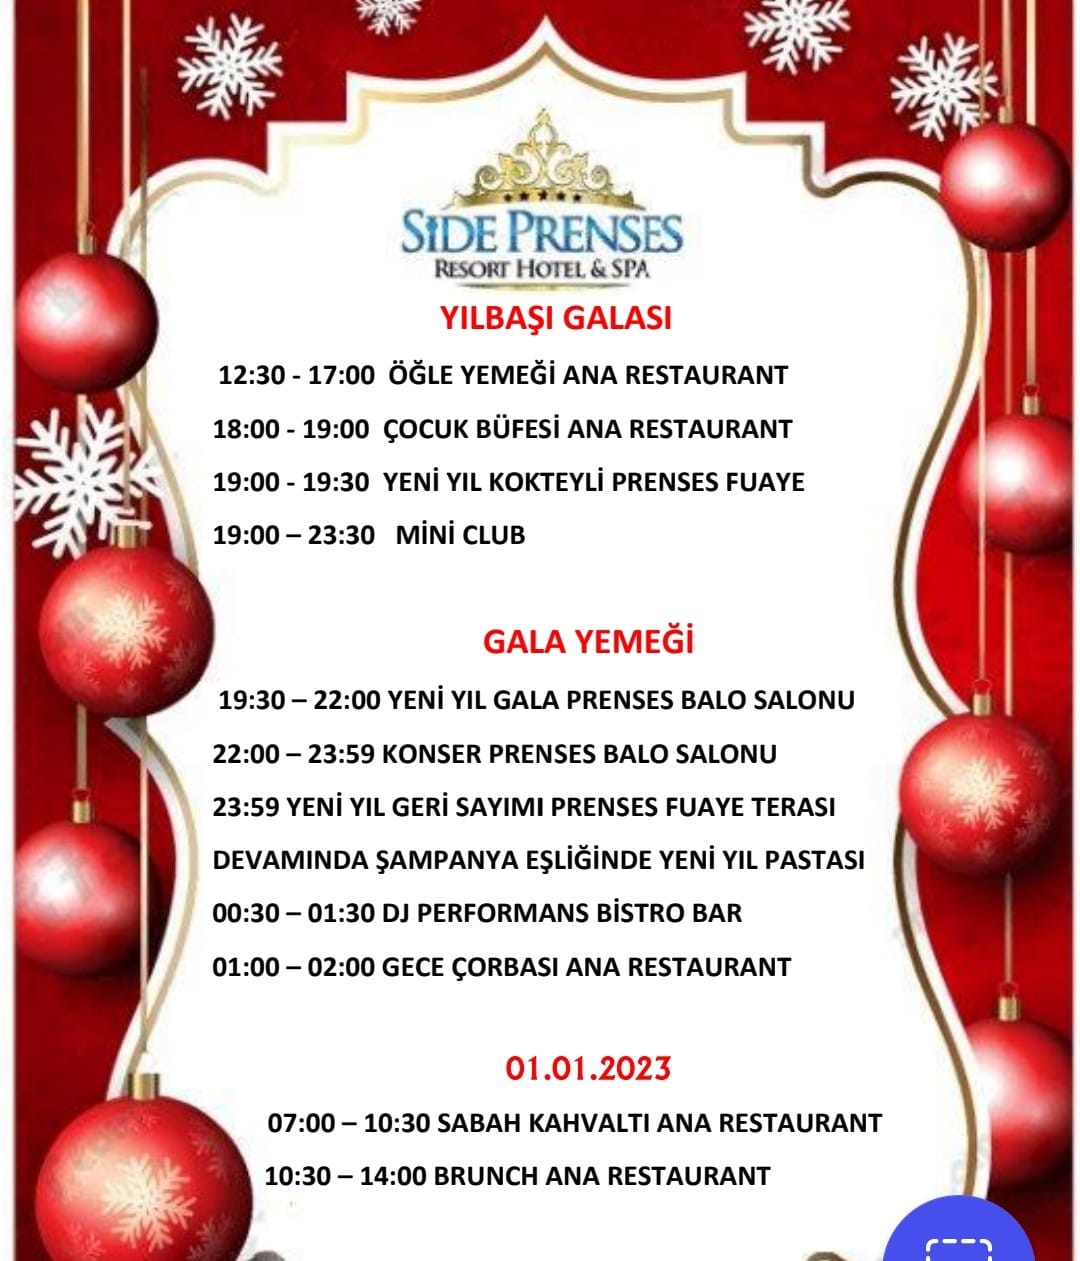 Side Prenses Resort Hotel & Spa yılbaşı programı